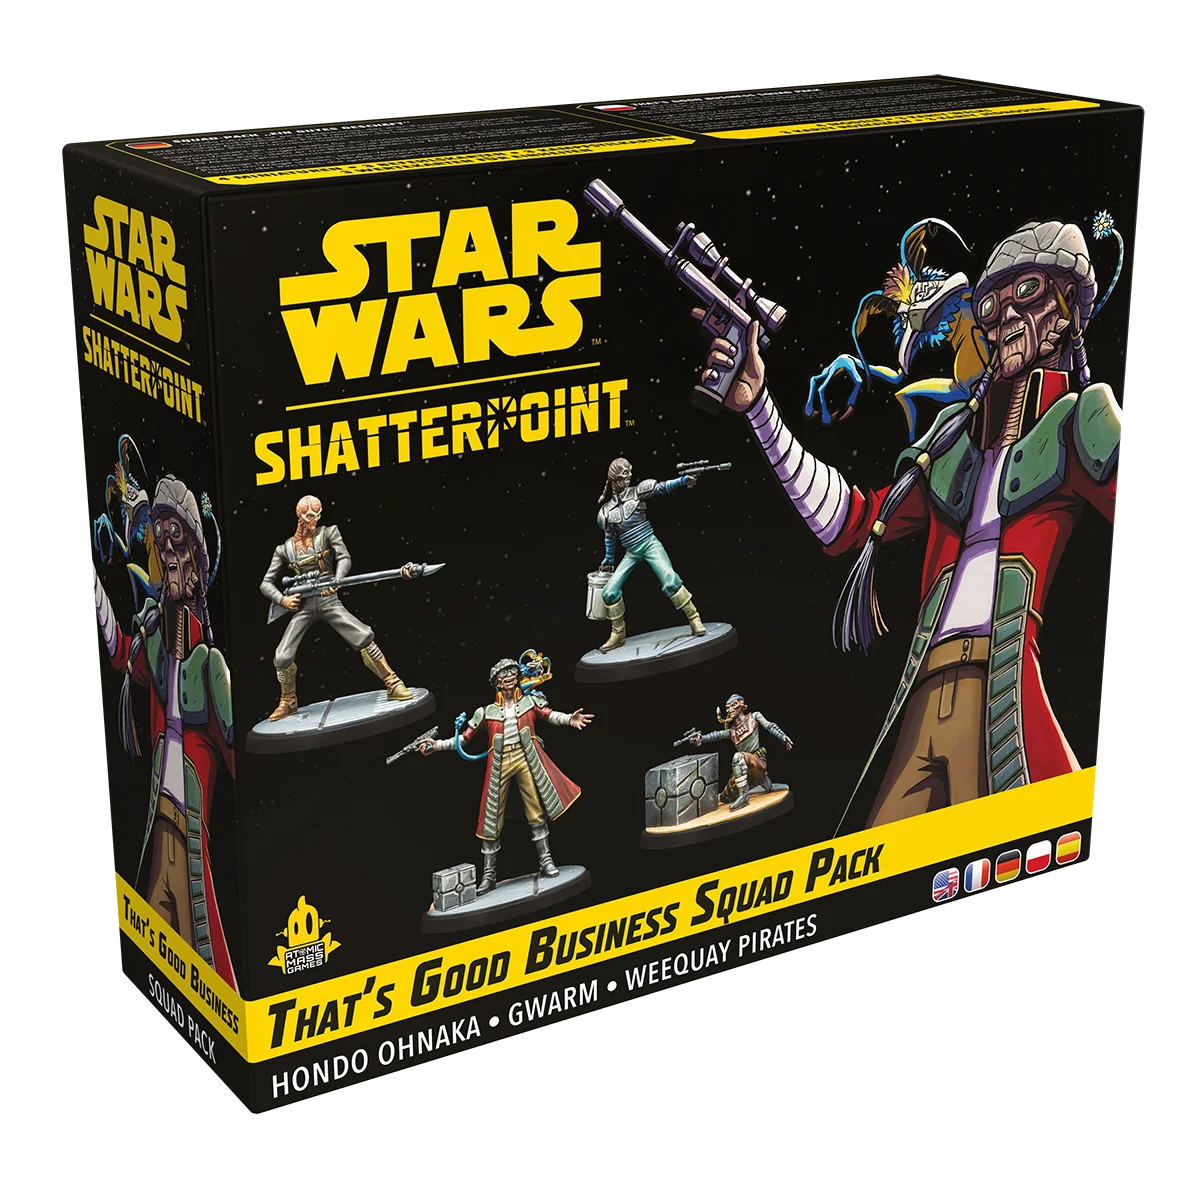 Star Wars: Shatterpoint – That’s Good Business Squad Pack (Squad-Pack Ein gutes Geschäft)